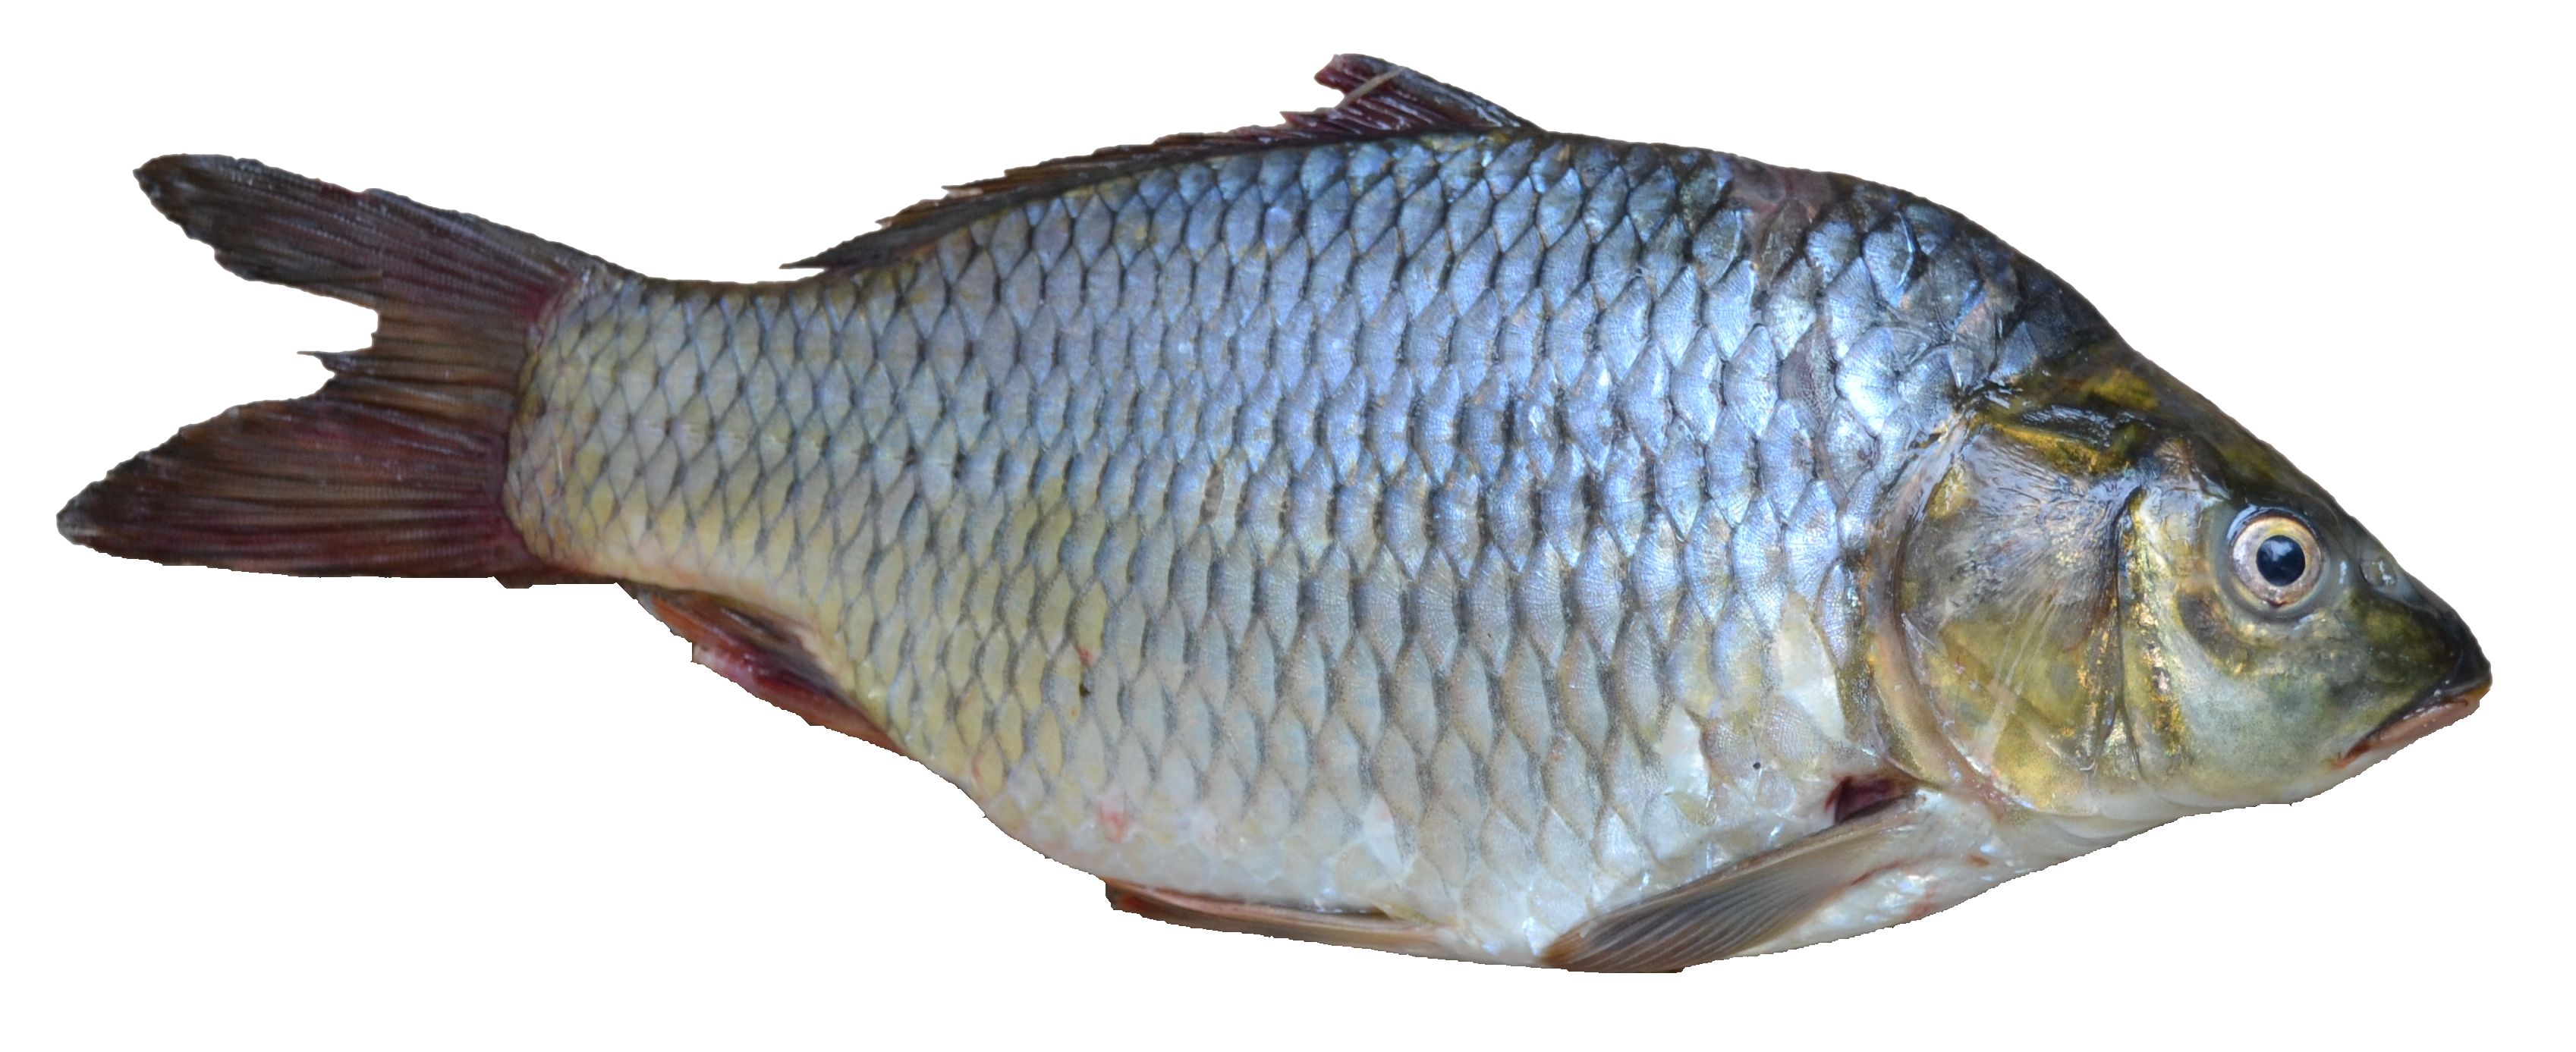 File:Fish - Puntius sarana from Kerala (India).png - Wikimedia Commons